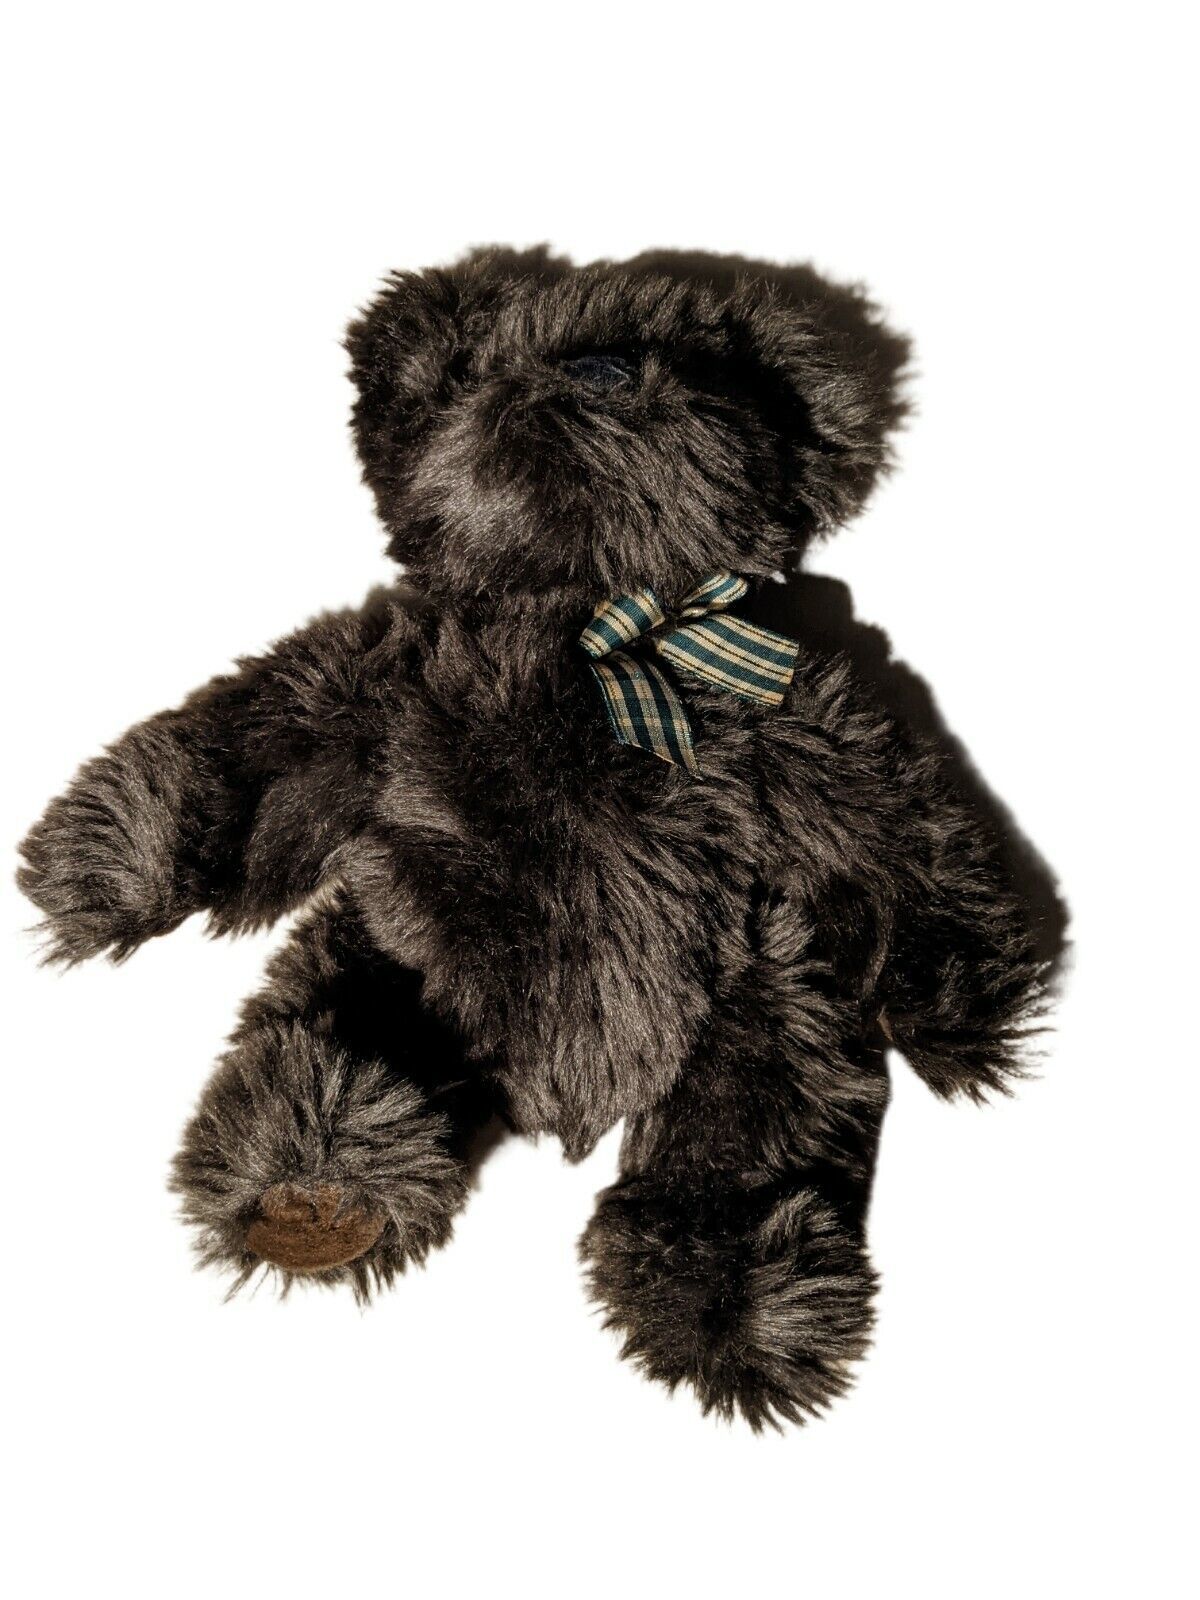 Ganz Heritage Collection "Benji" Dark Brown Soft Teddy Bear Stuffed Animal 2000 - $22.70